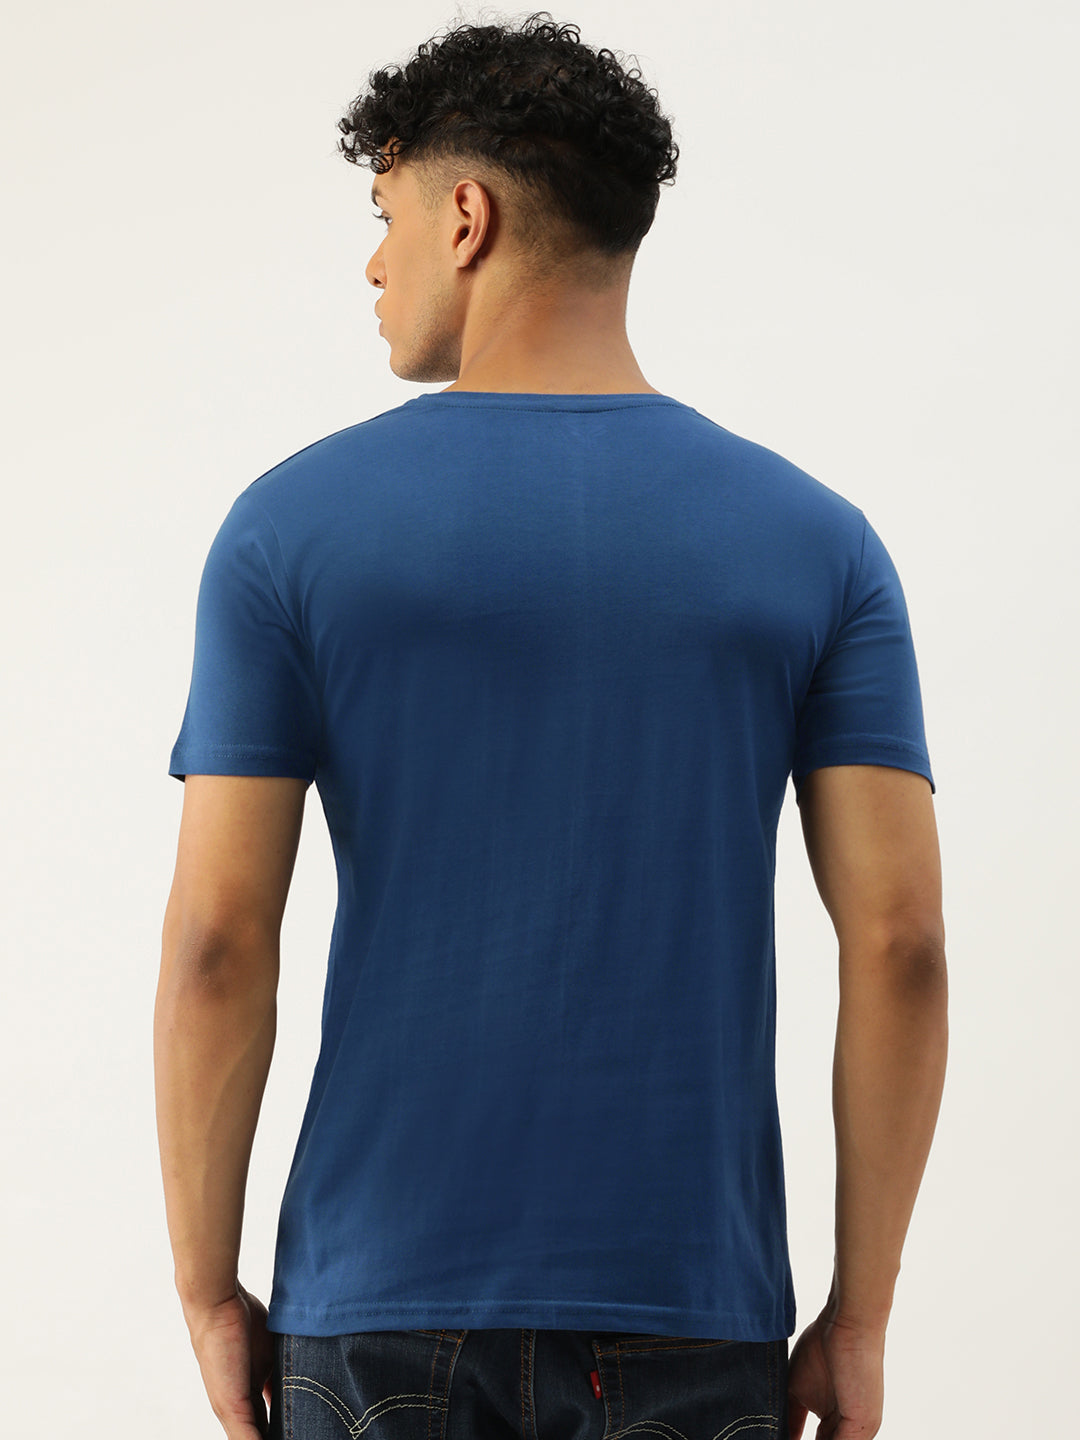 Plain Teal Blue Half Sleeves T-shirt